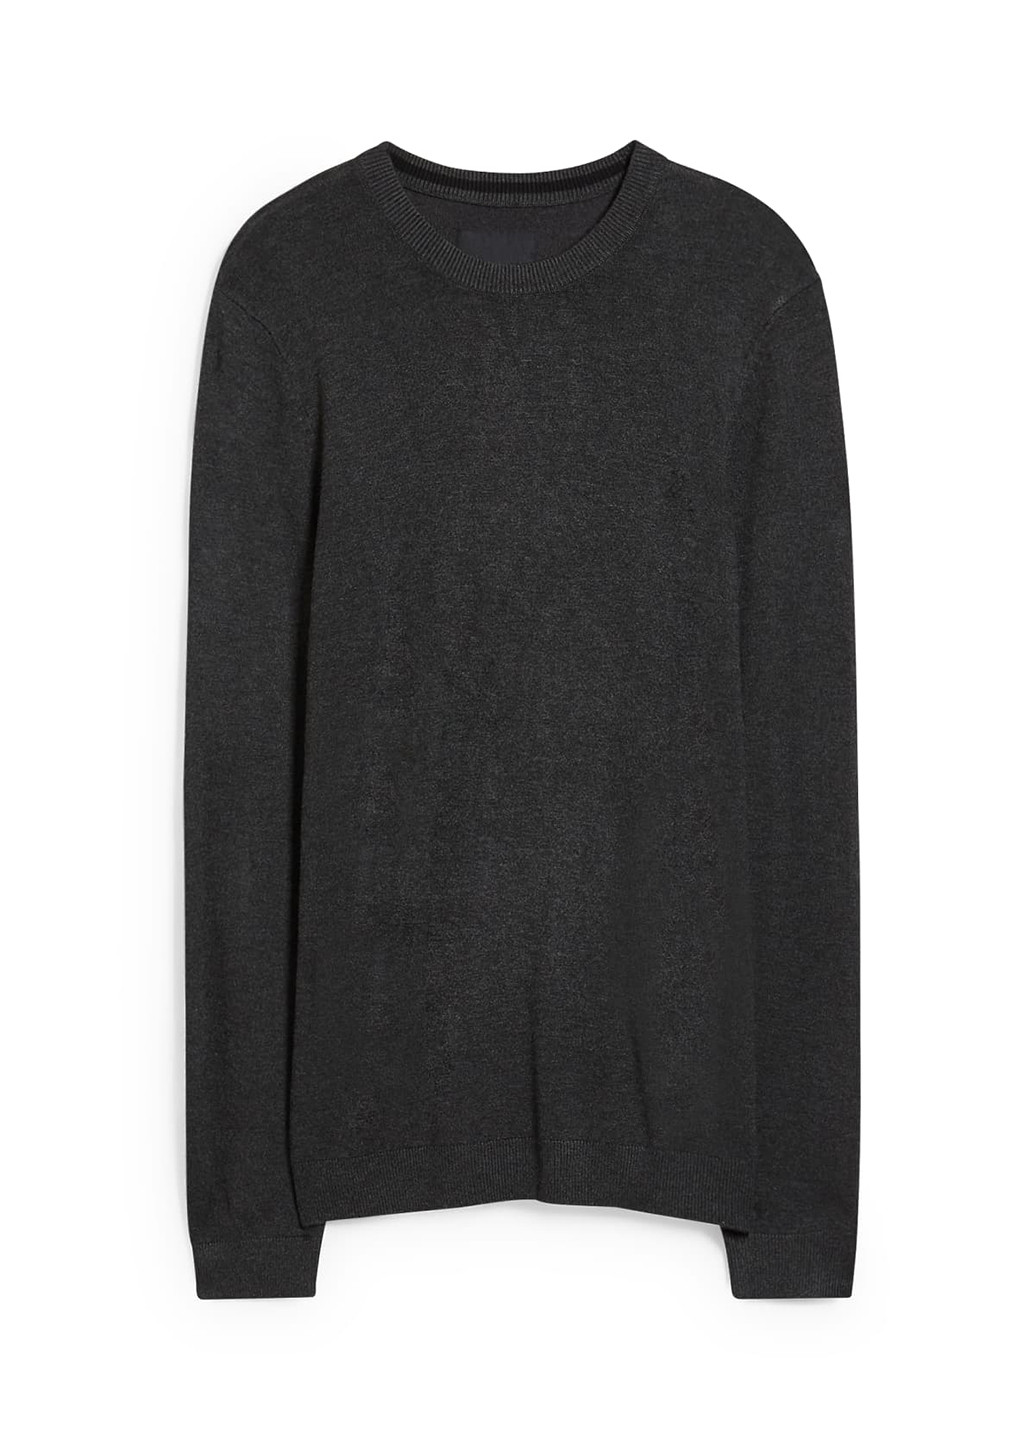 Темно-серый зимний свитер джемпер C&A